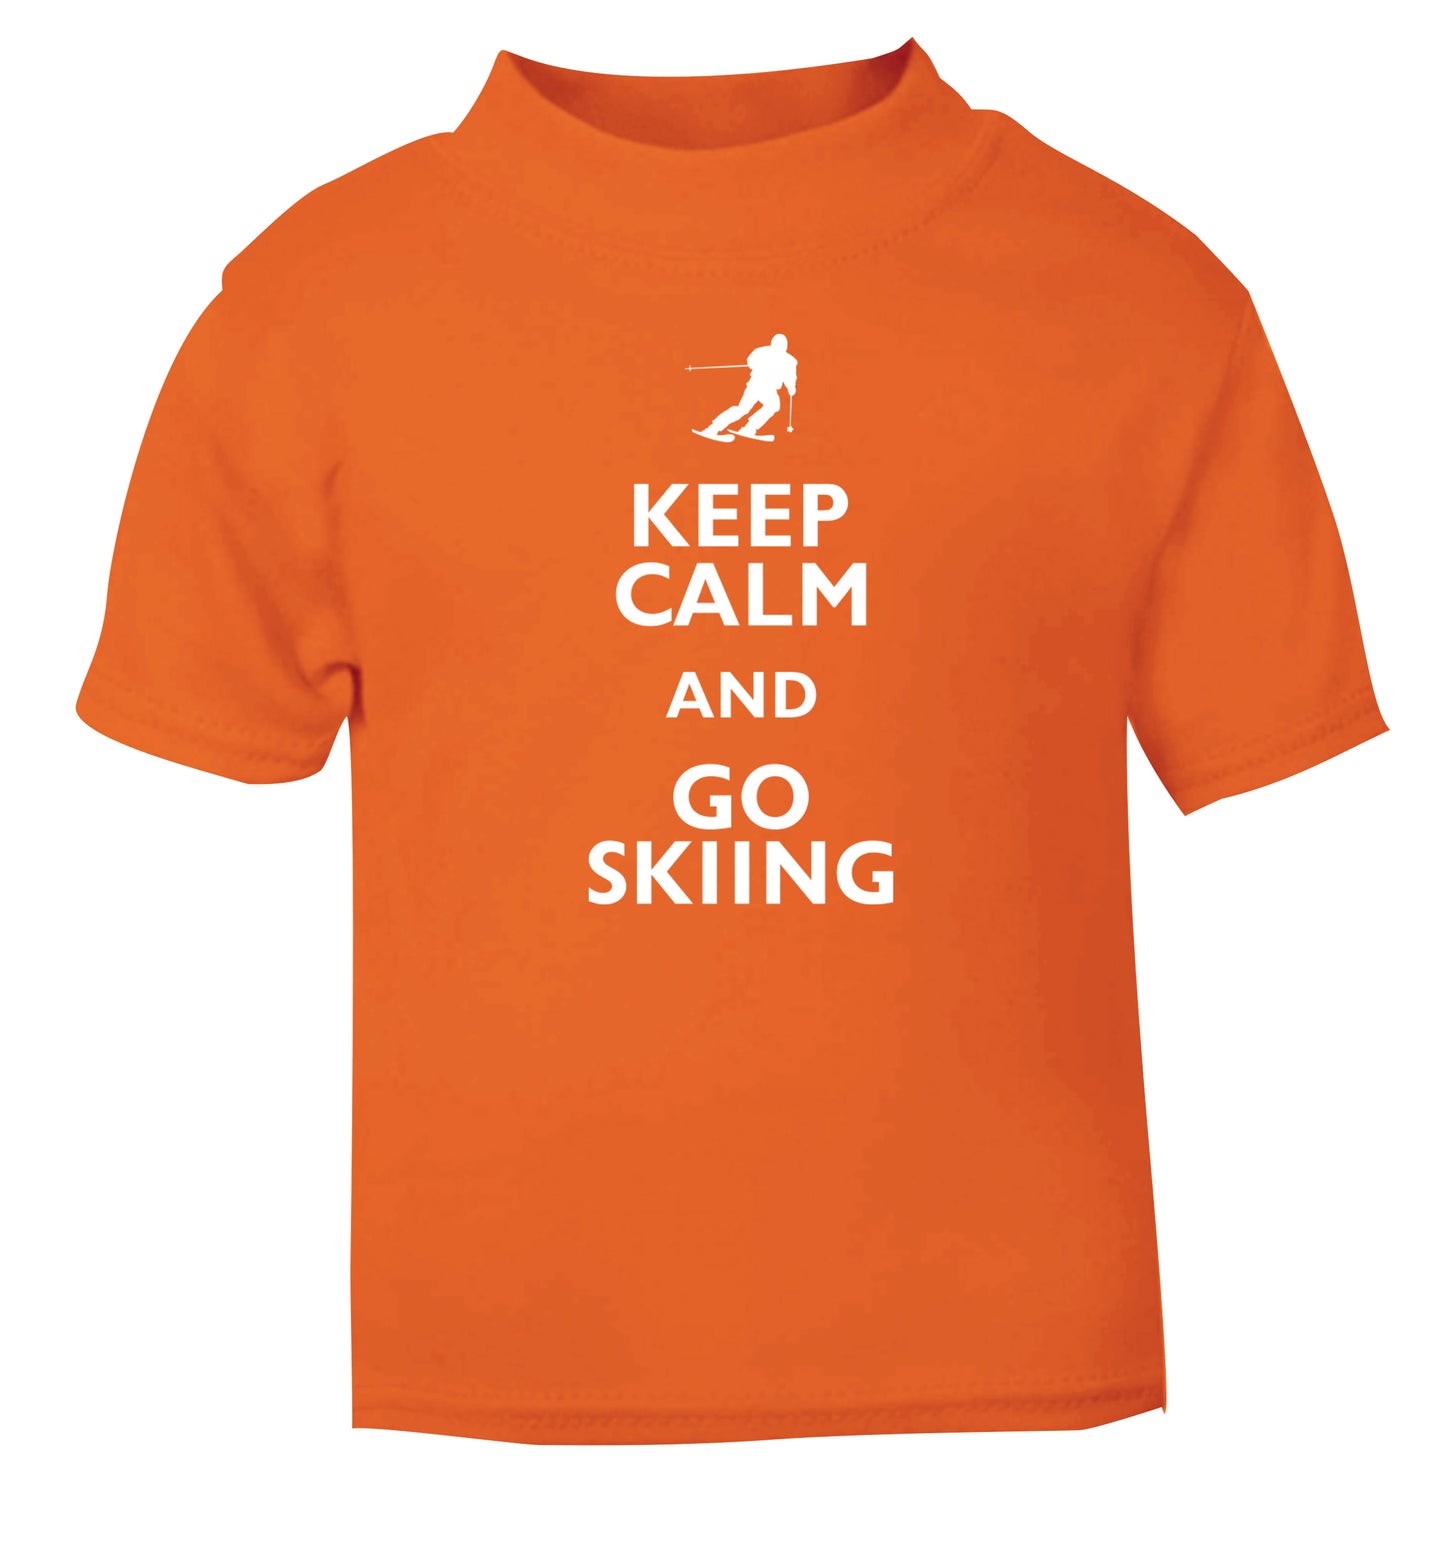 Keep calm and go skiing orange Baby Toddler Tshirt 2 Years